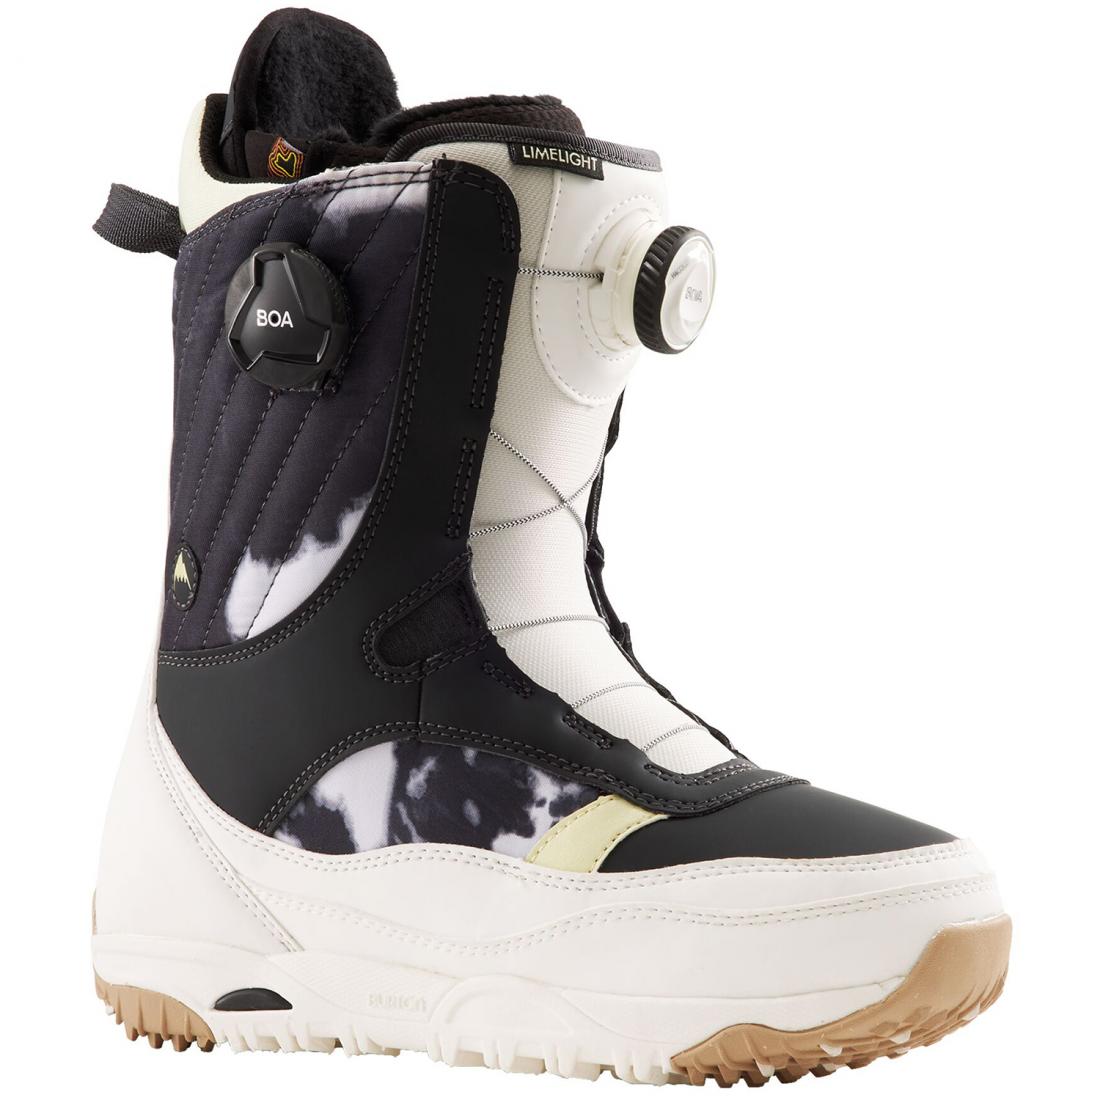 фото Ботинки для сноуборда burton limelight boa